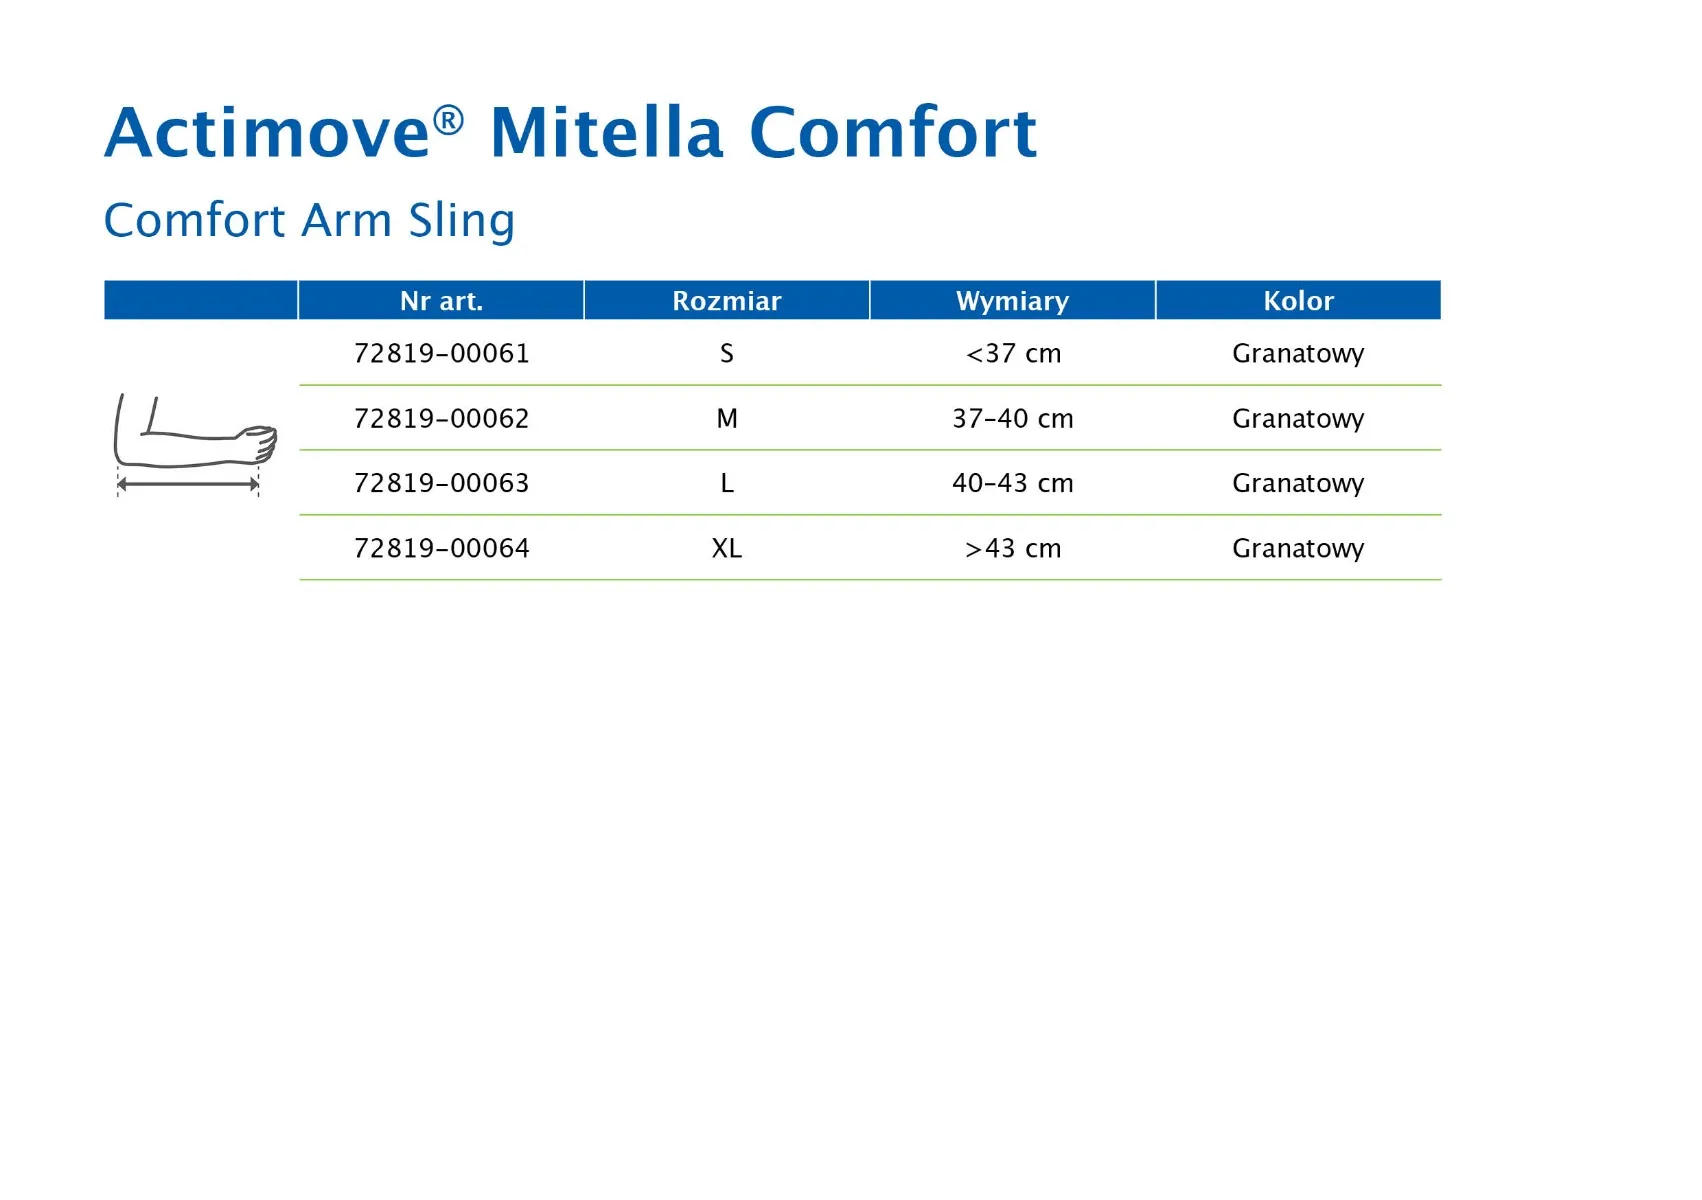 Actimove Professional Line Mitella Comfort temblak ortopedyczny, granatowy, XL, 1 szt. 